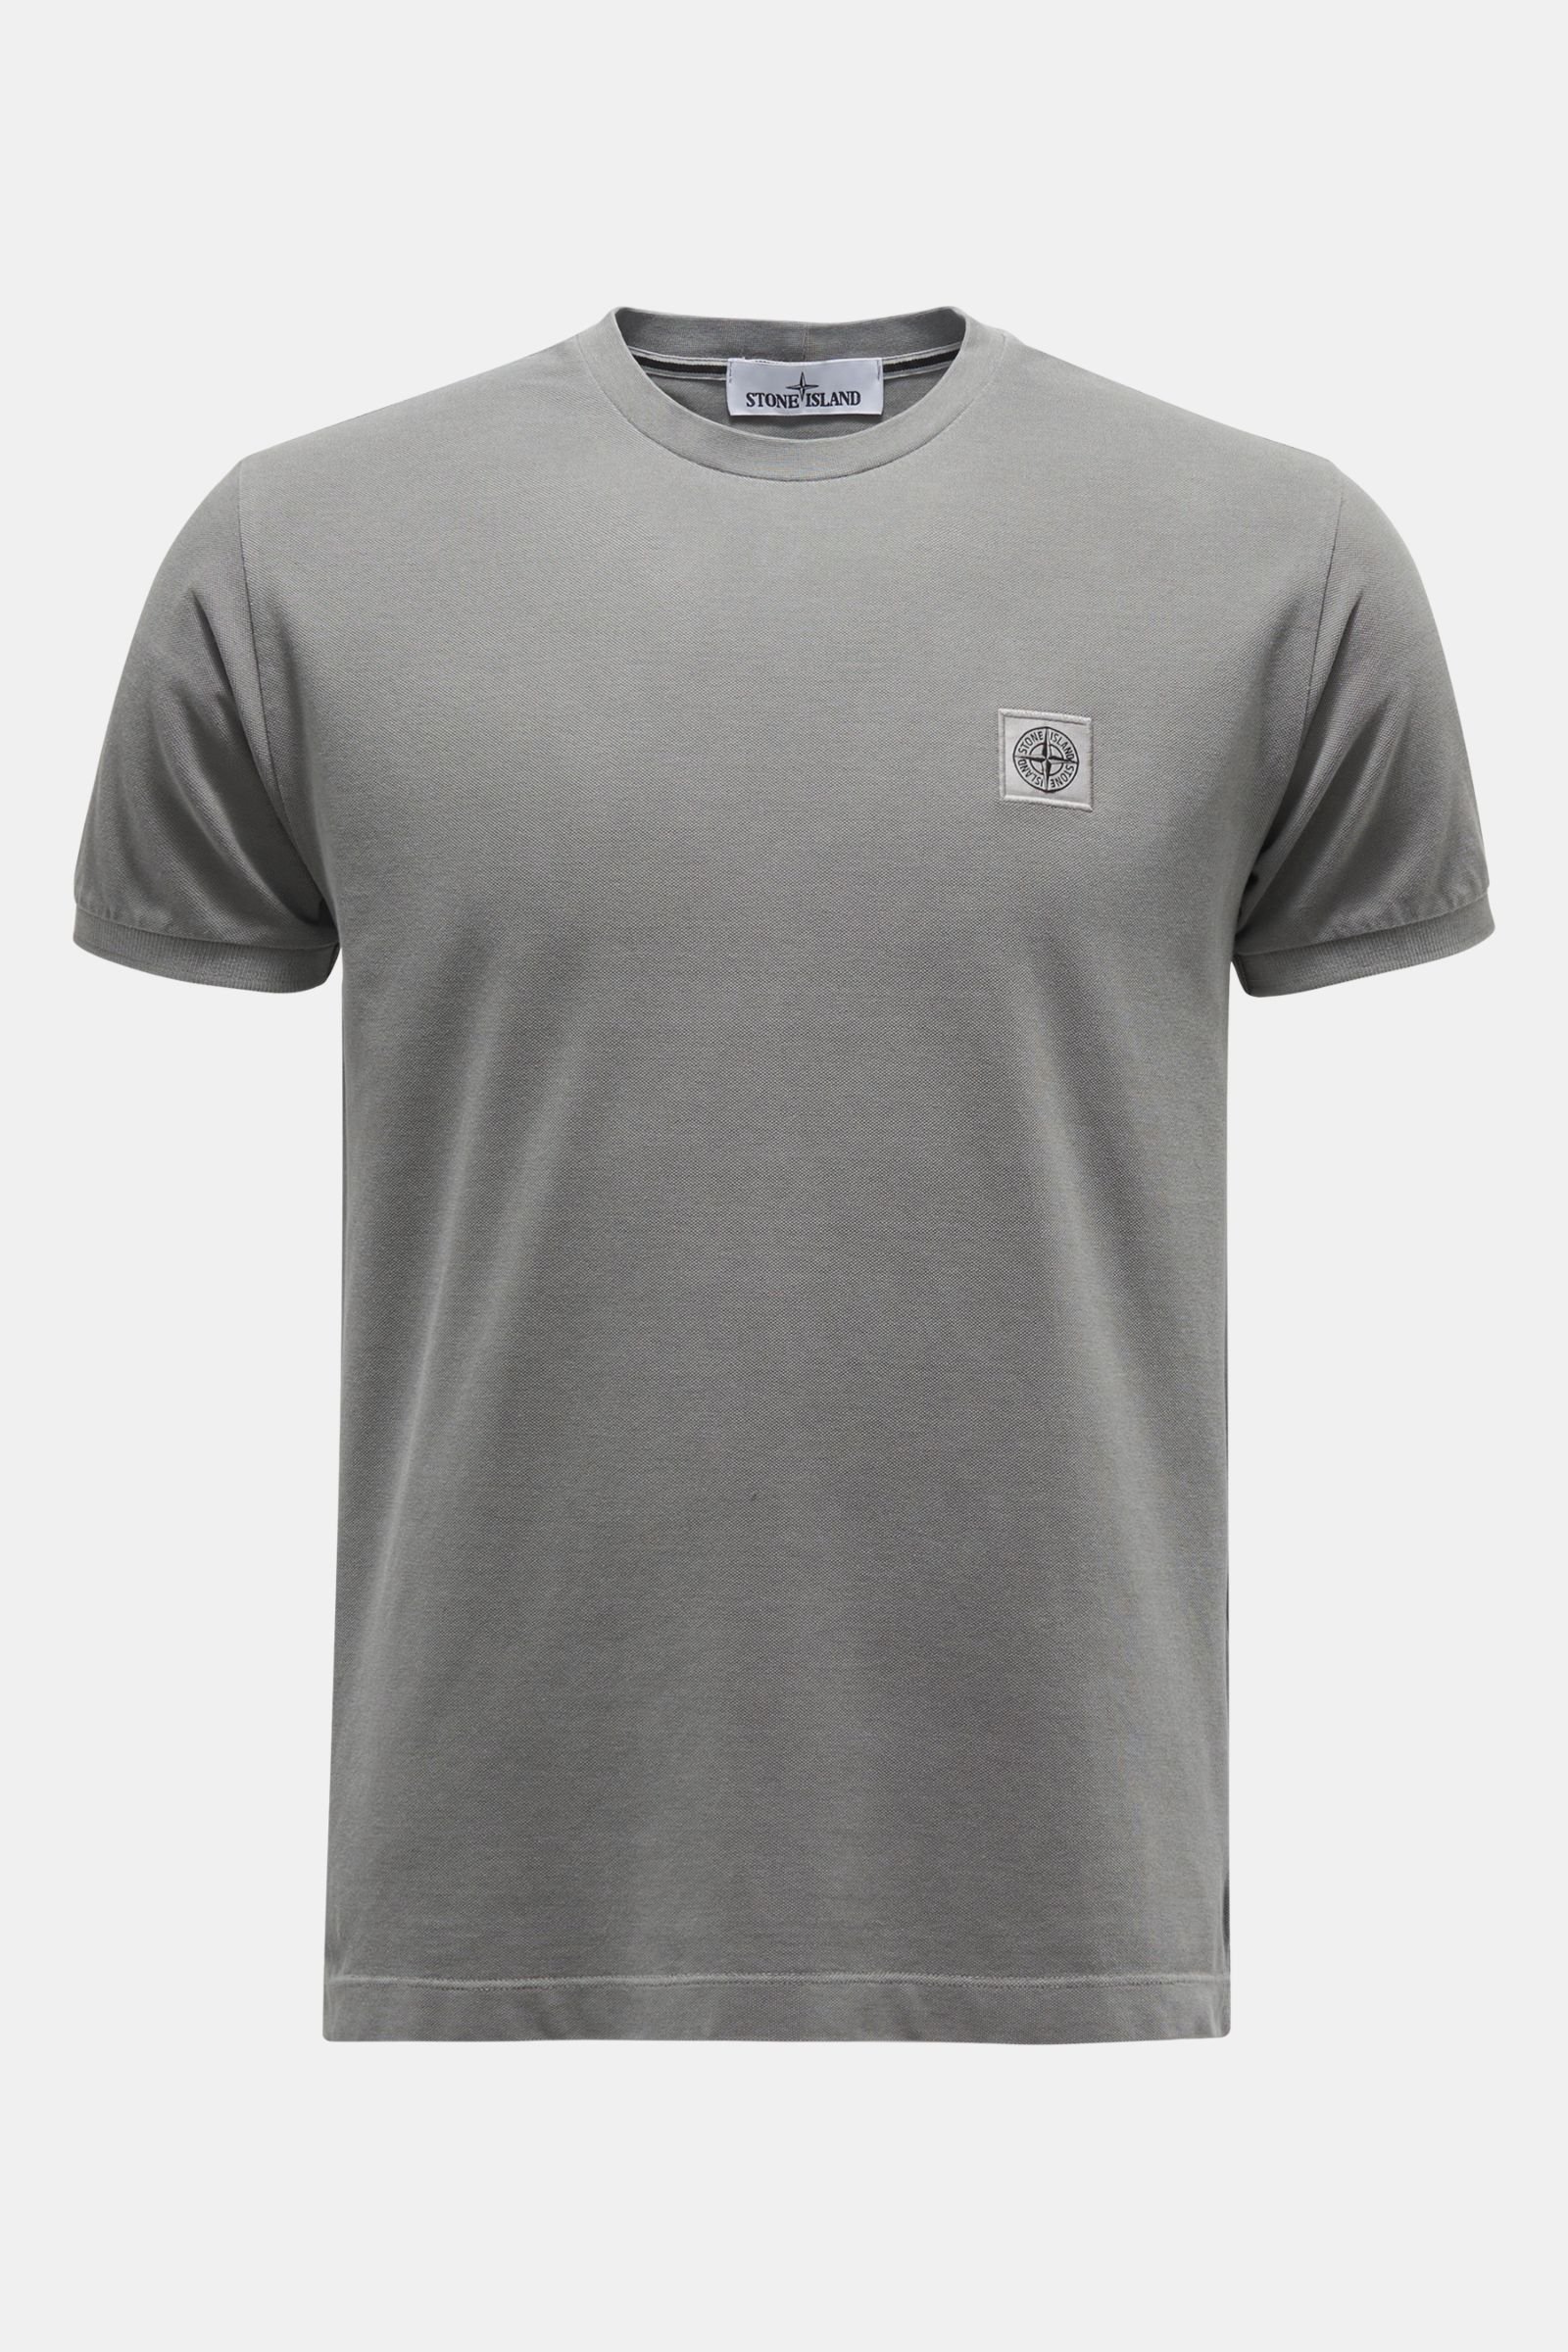 Rundhals-T-Shirt grau